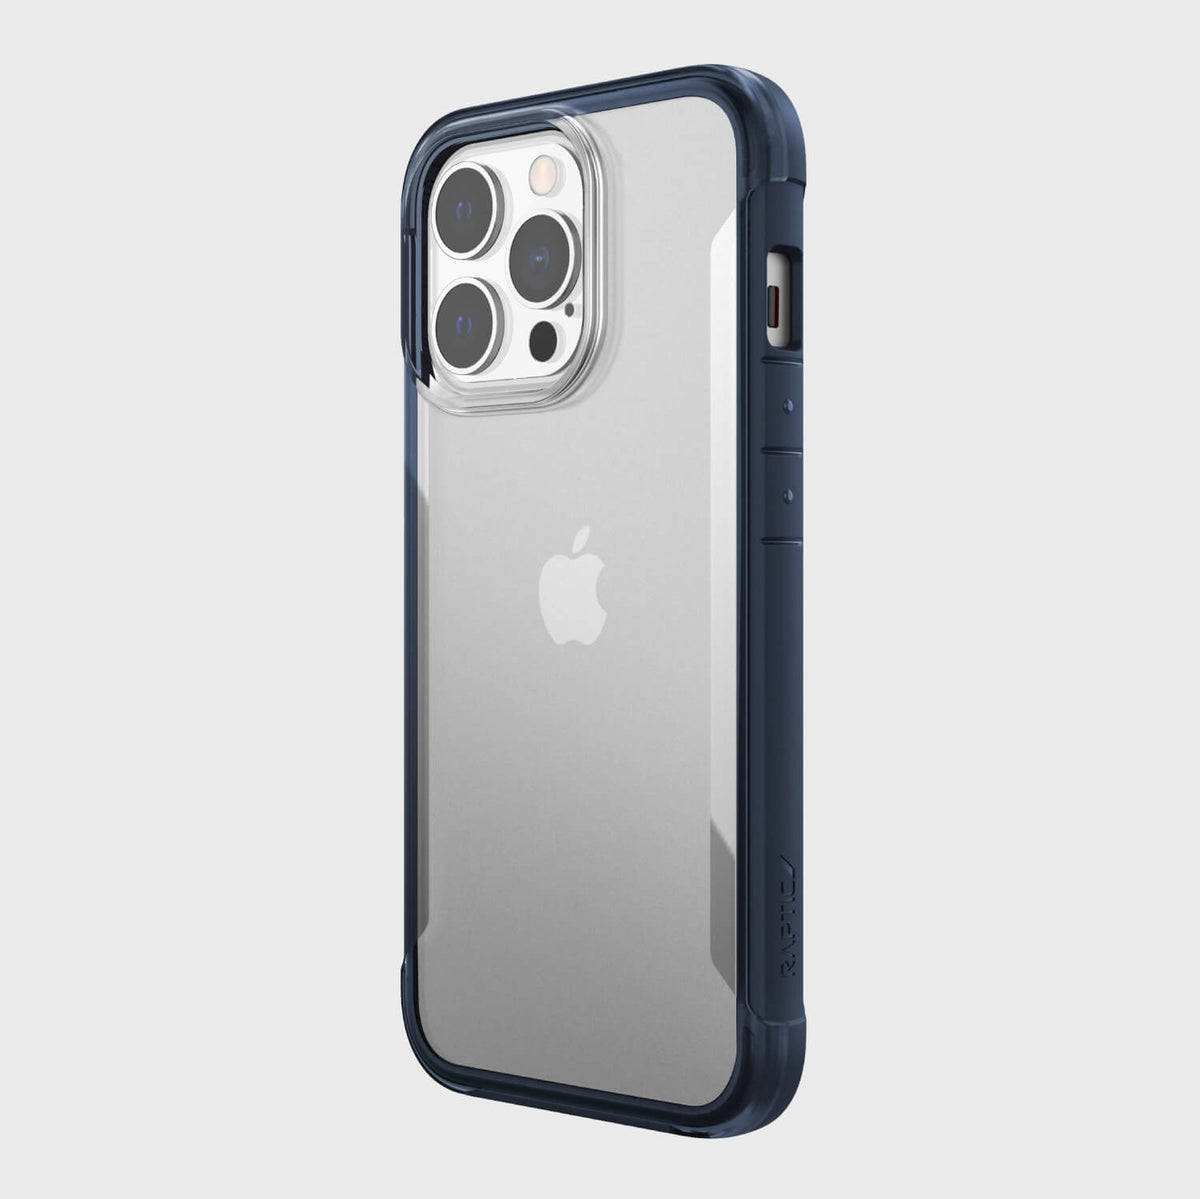 Showing an iPhone 13 Pro in a blue Raptic Terrain case